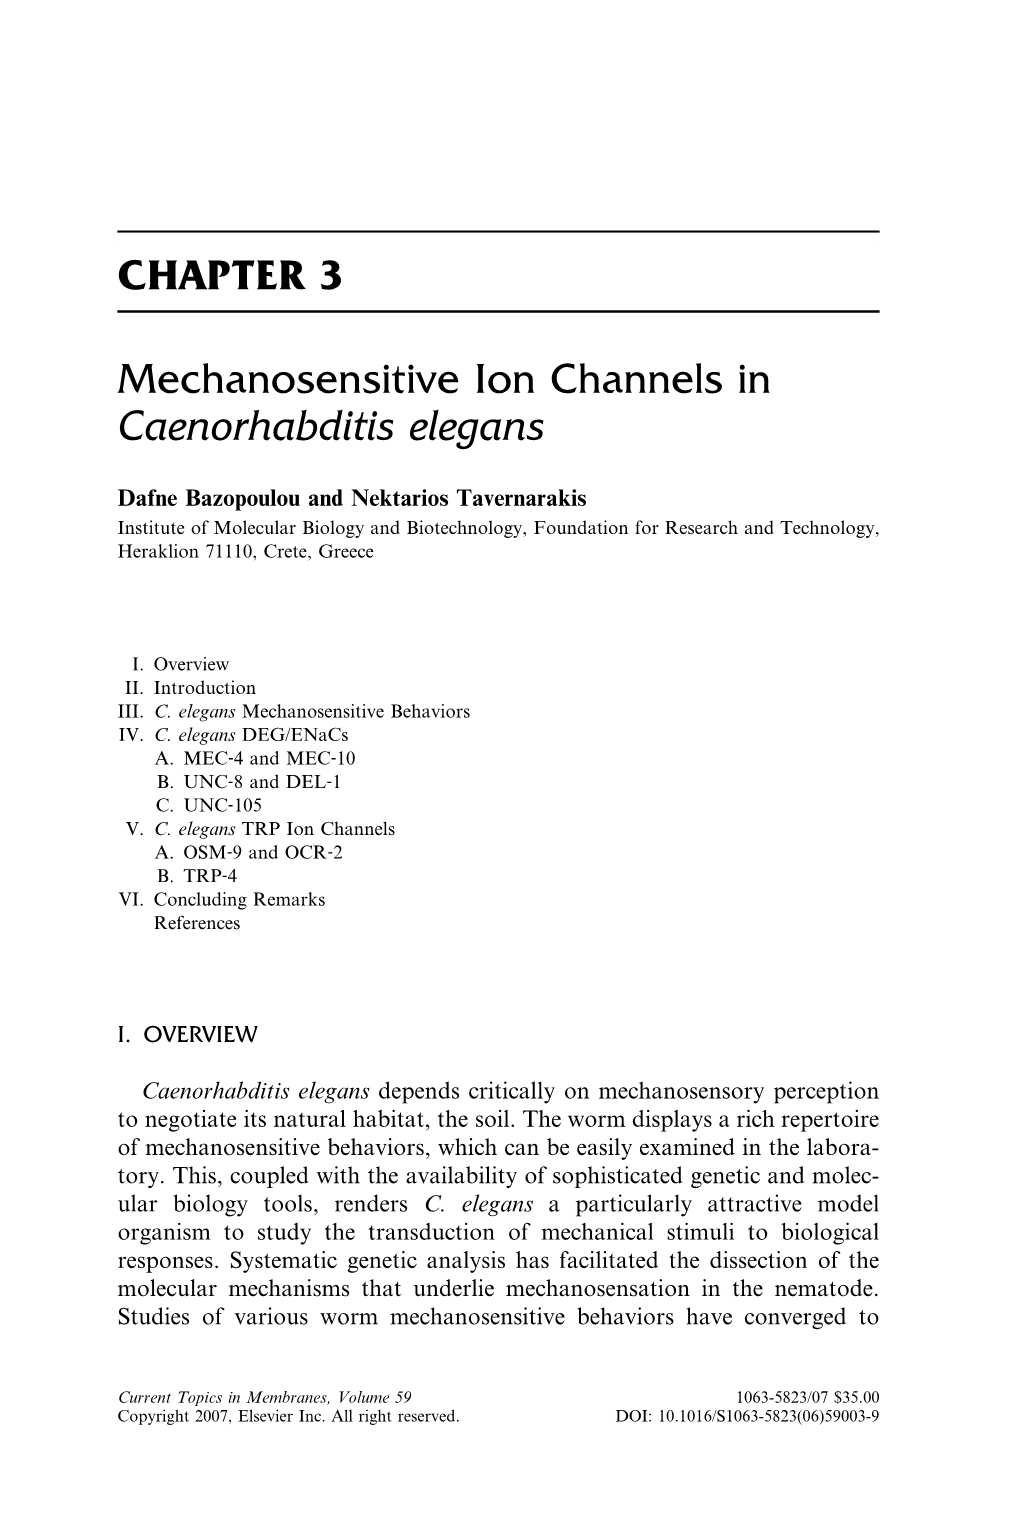 CHAPTER 3 Mechanosensitive Ion Channels in Caenorhabditis Elegans